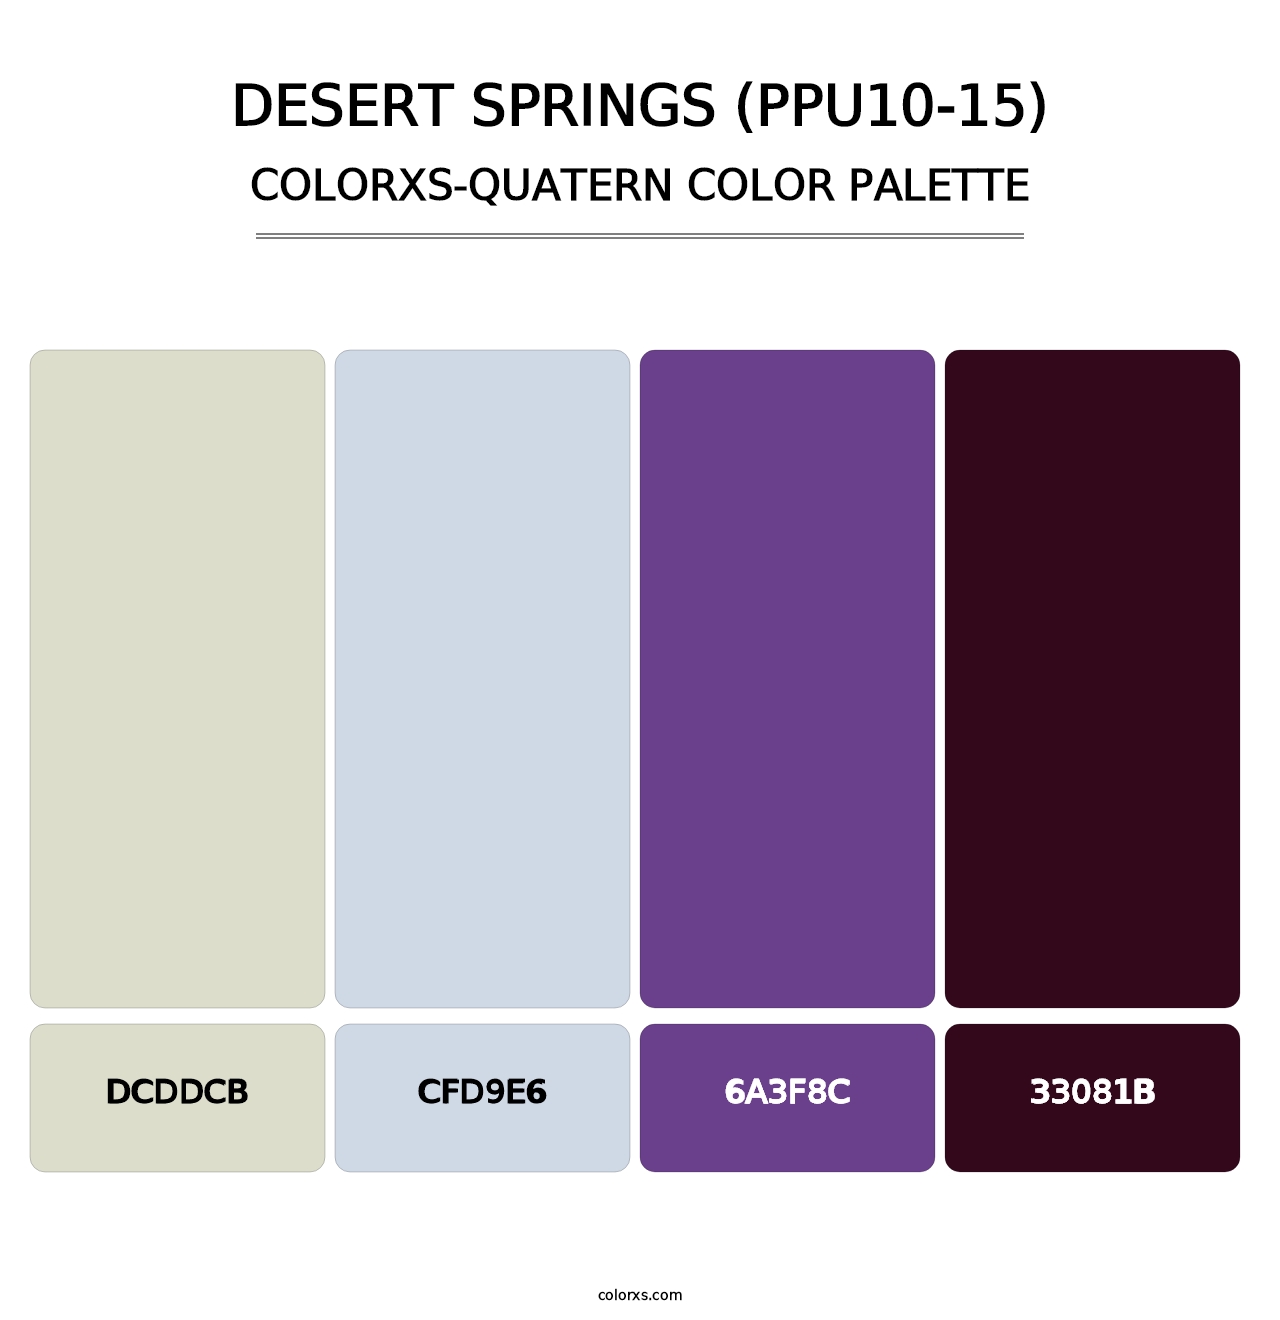 Desert Springs (PPU10-15) - Colorxs Quatern Palette